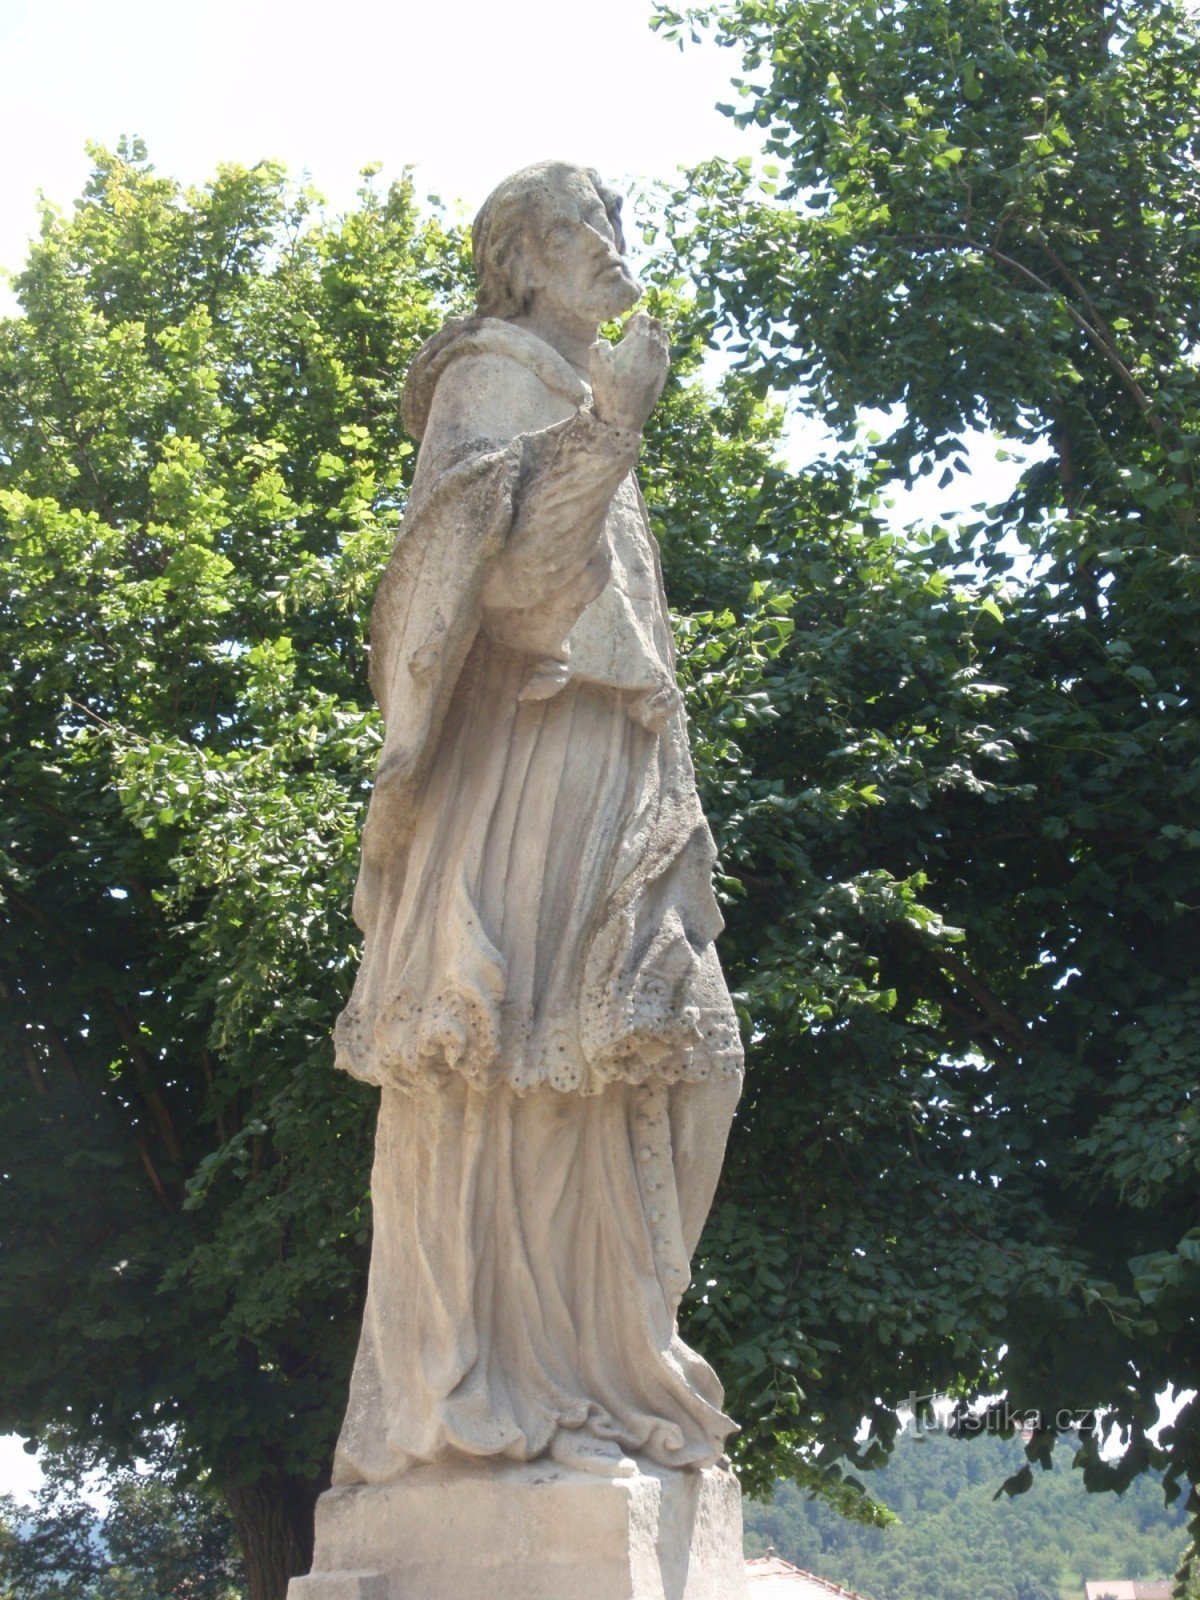 St. John's statues in Rosice